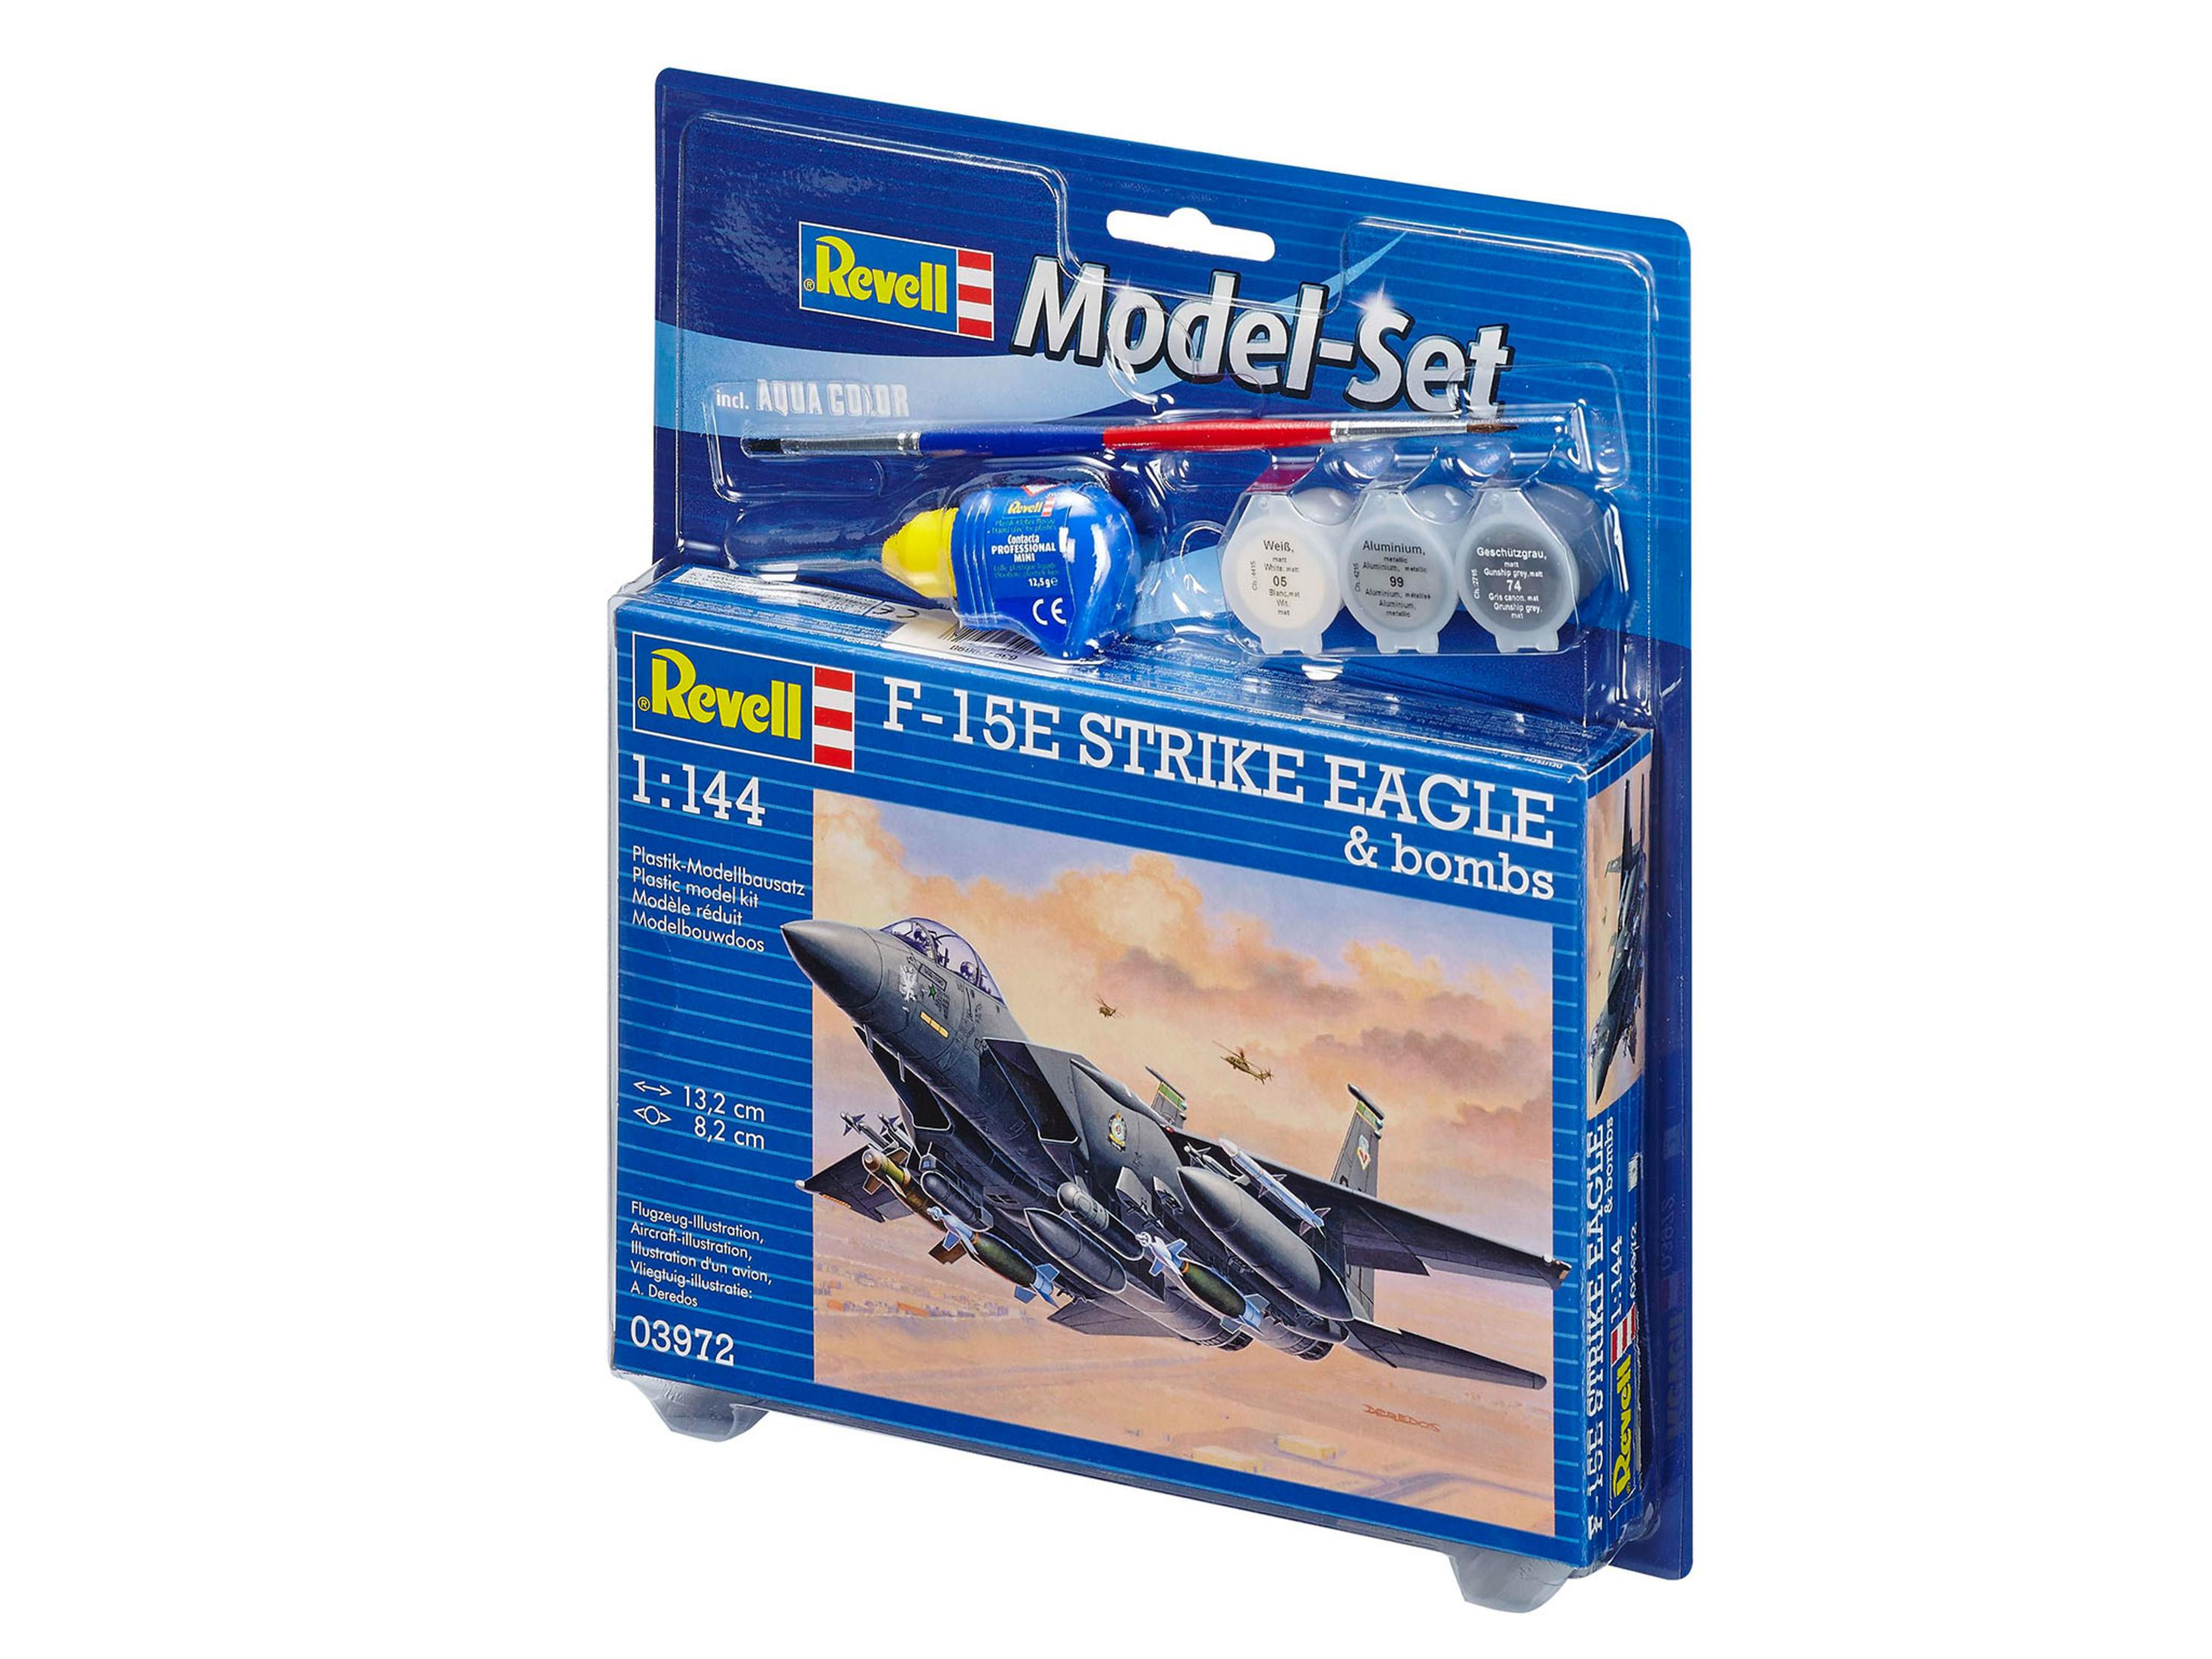 STRIKE REVELL F-15E B Eagle B 63972 F-15E MODEL Mehrfarbig Modellbausatz, & Strike & EAGLE SET